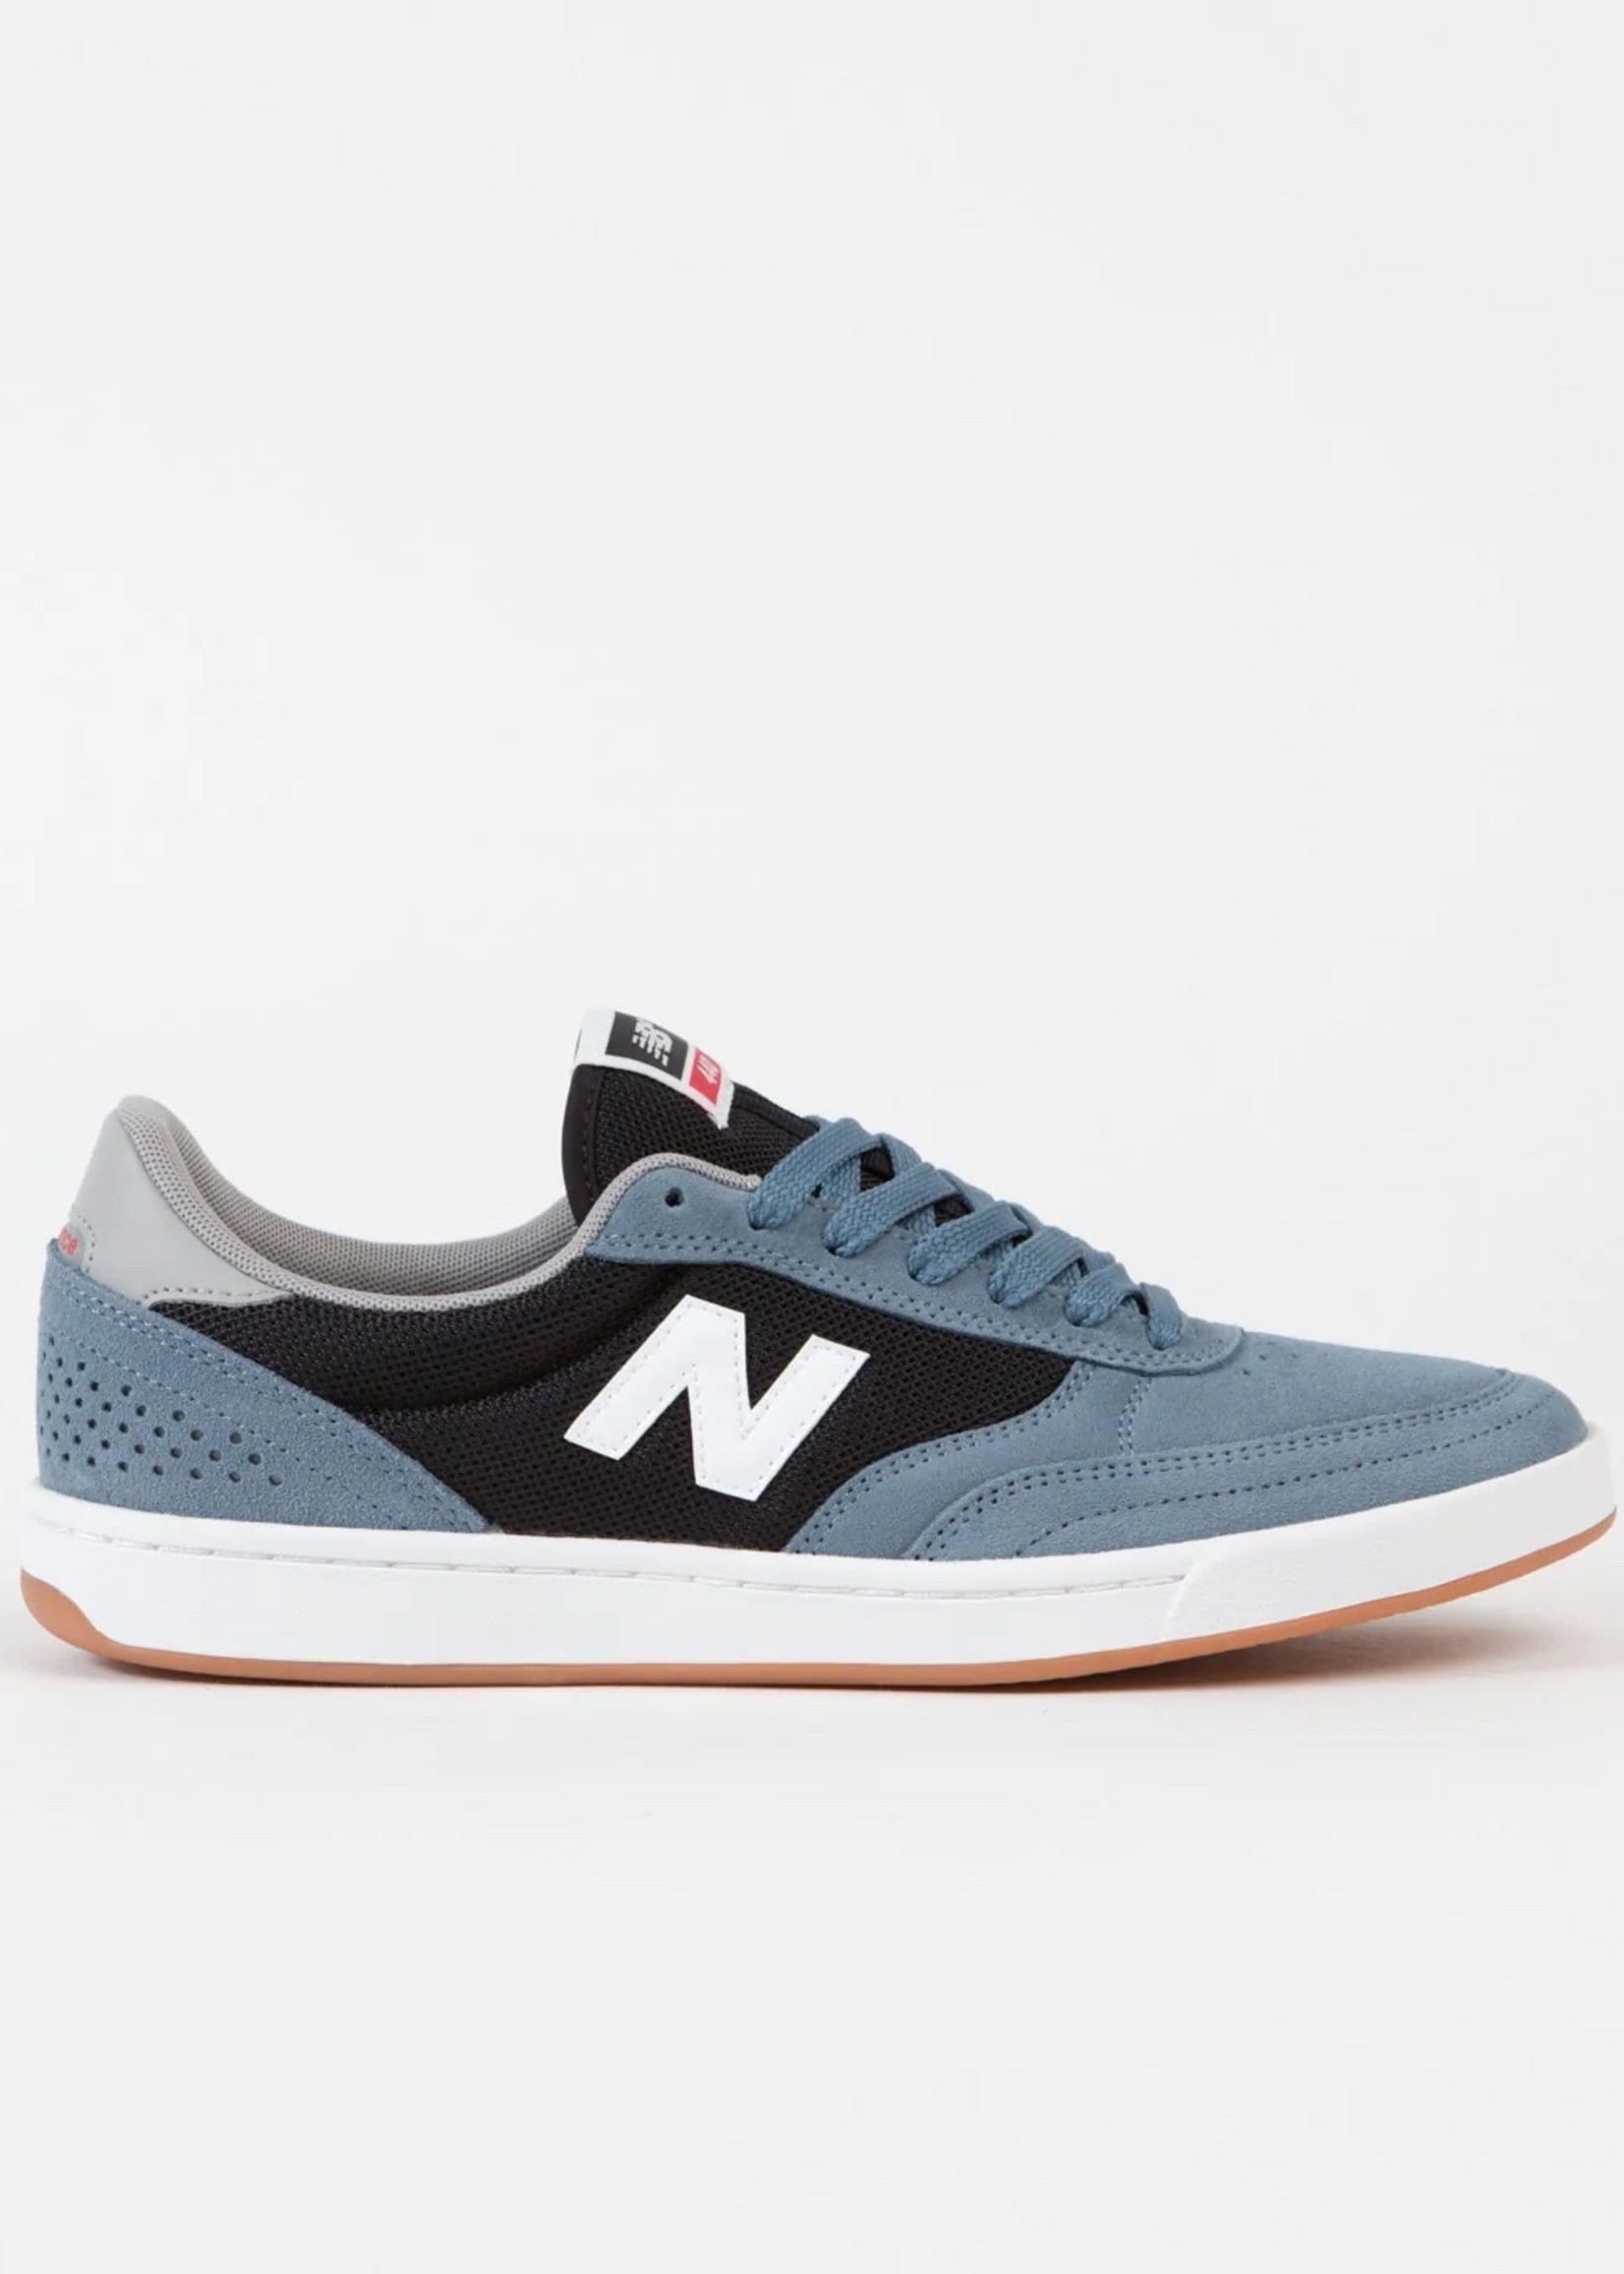 New Balance NB Numeric 440 Blue/Black